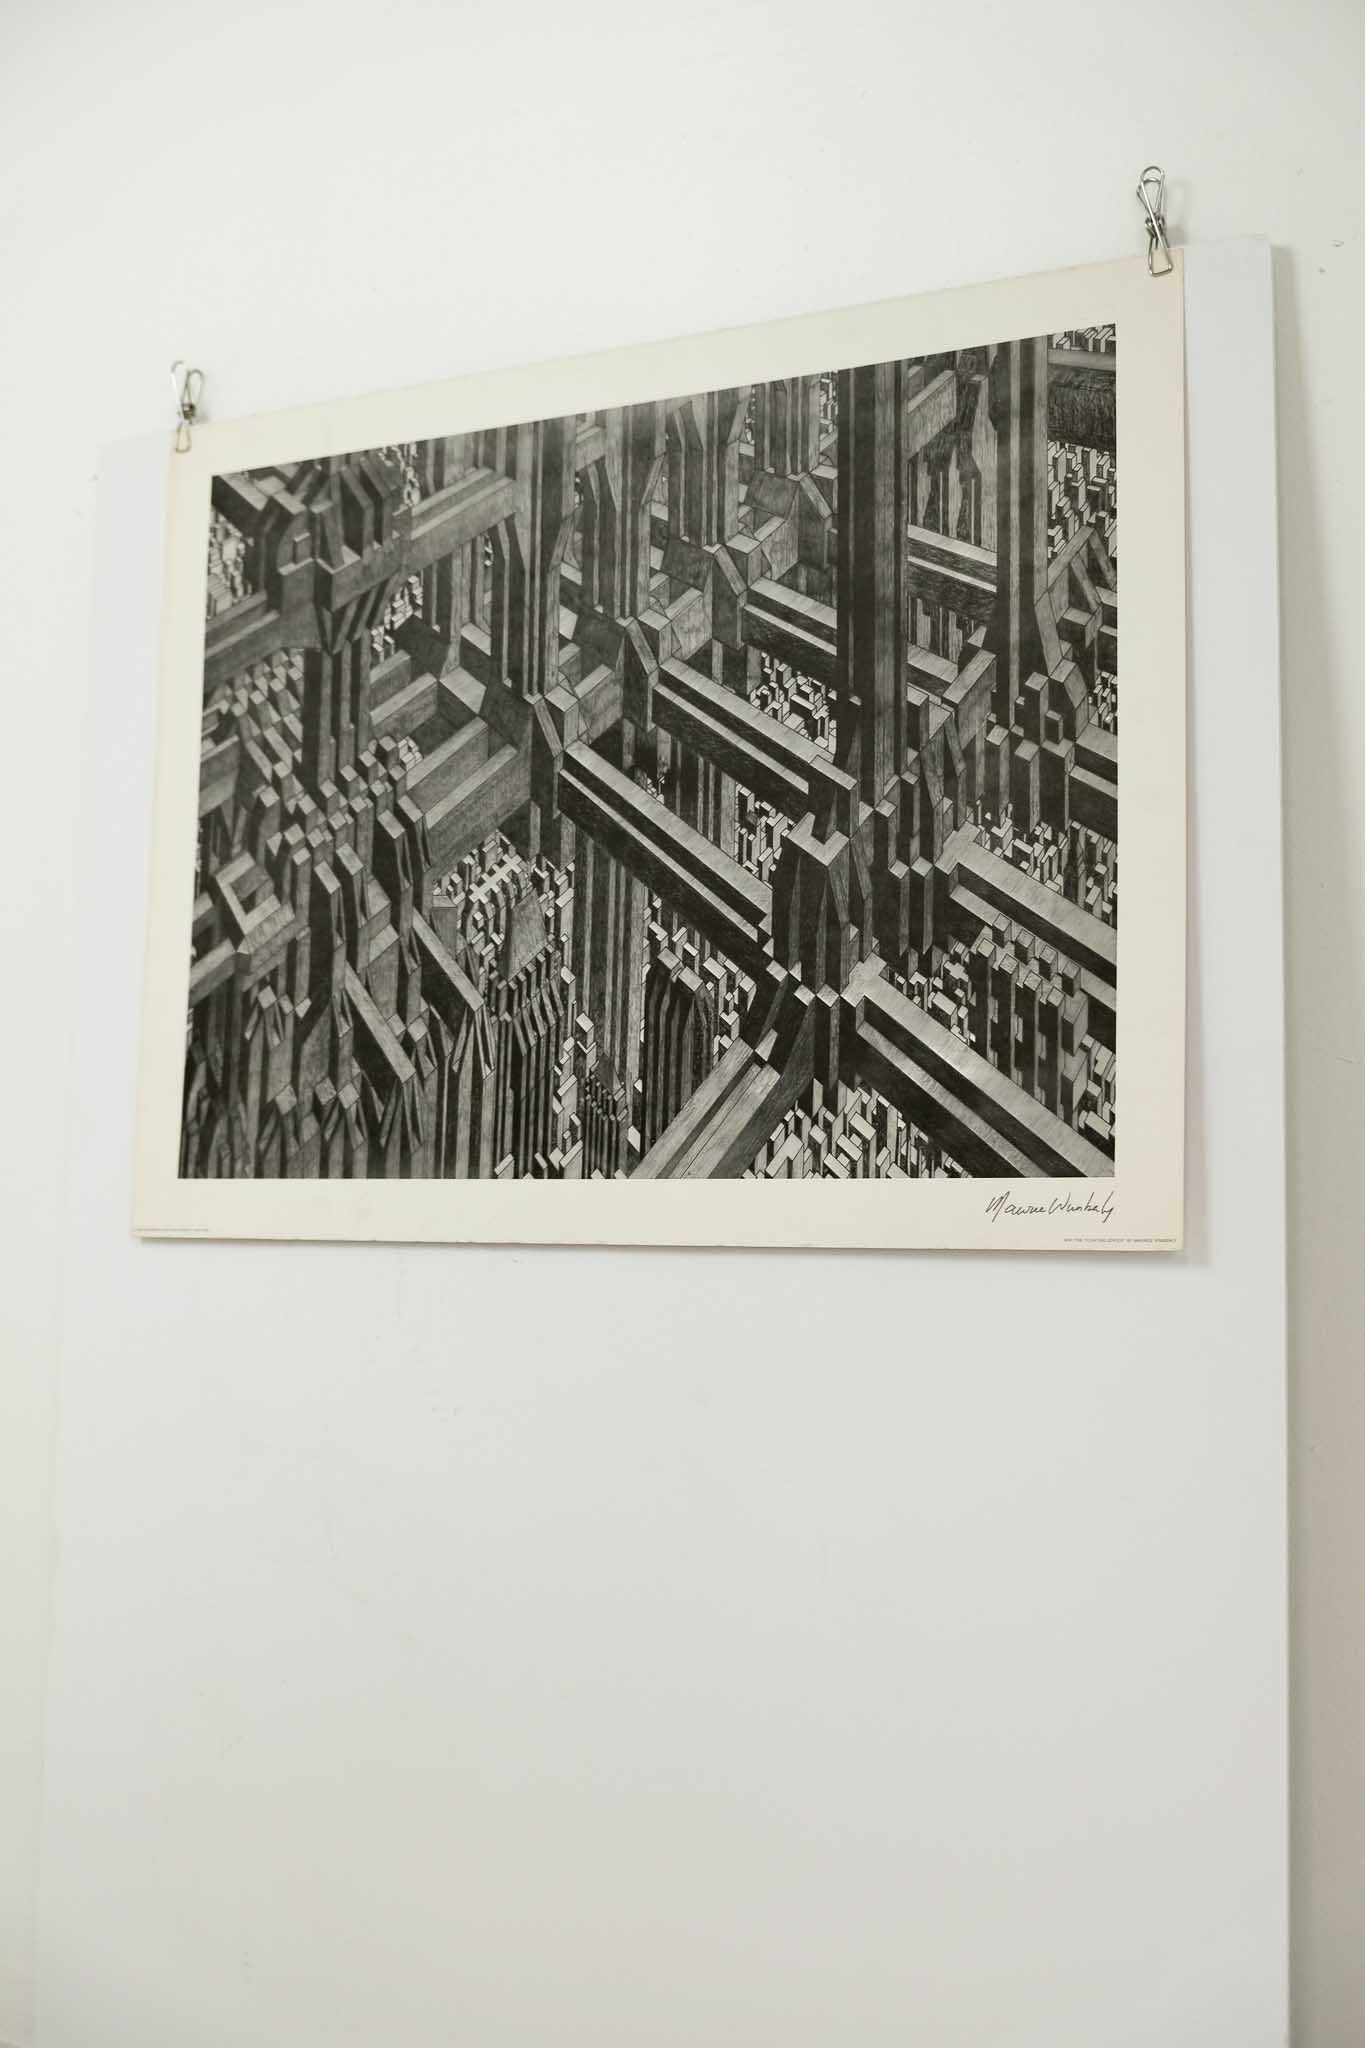 Maurice Wimberly "Floating Edifice" Print